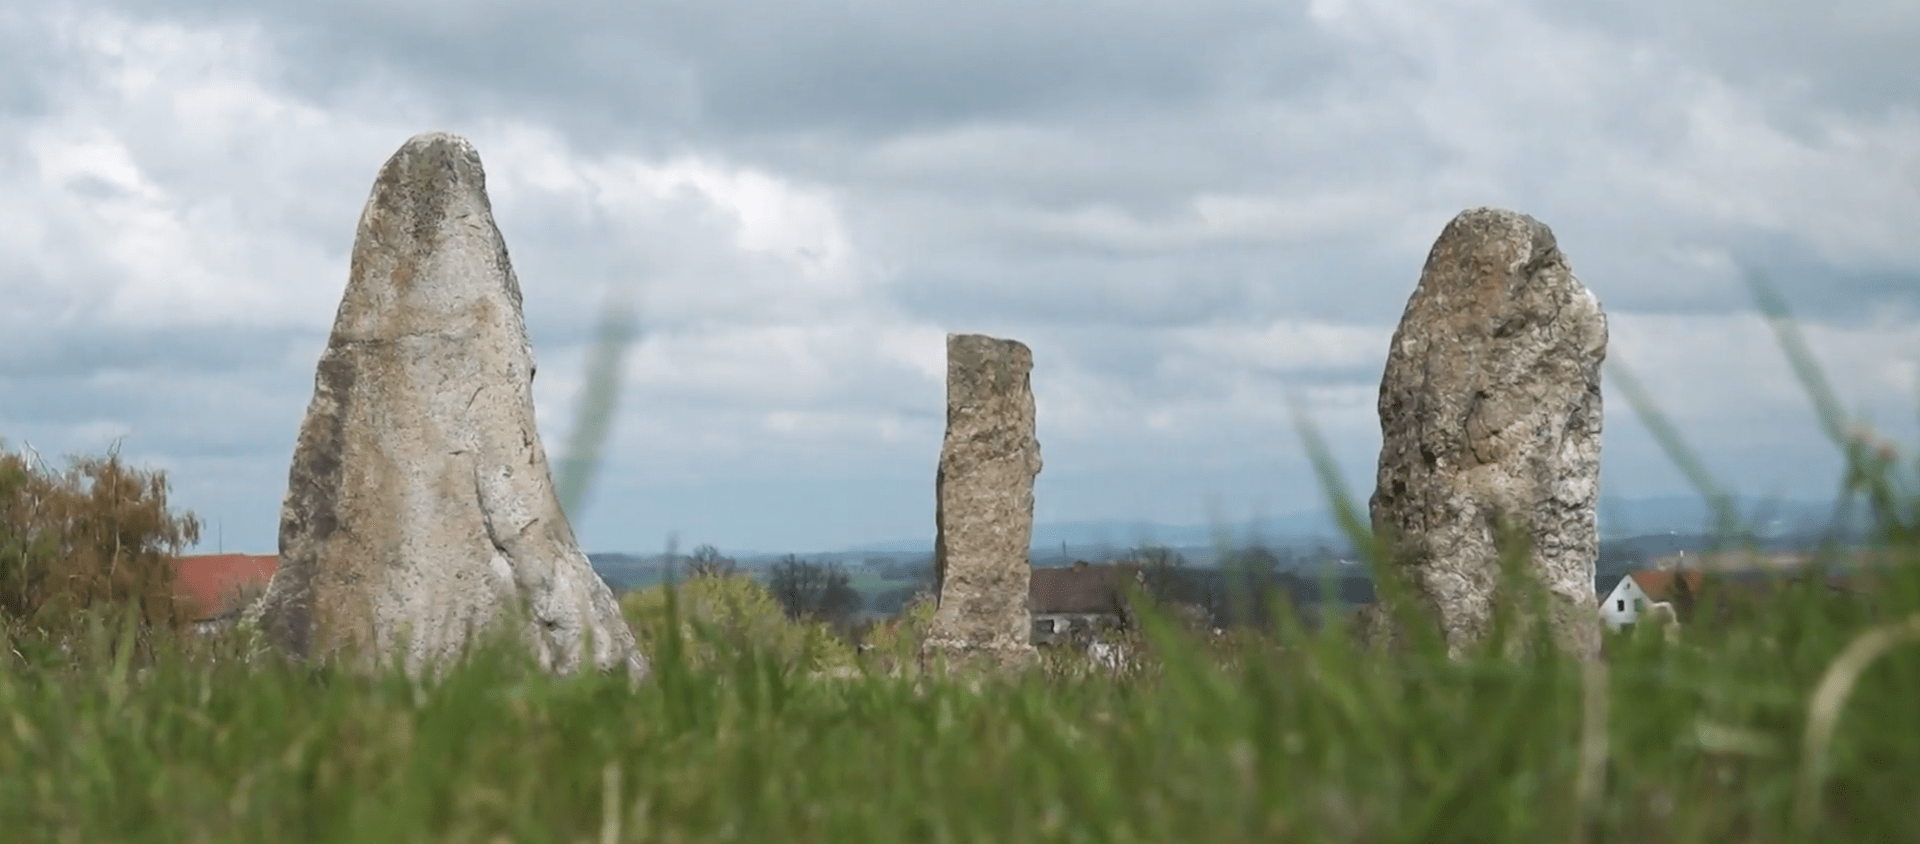 Holašovické Stonehenge